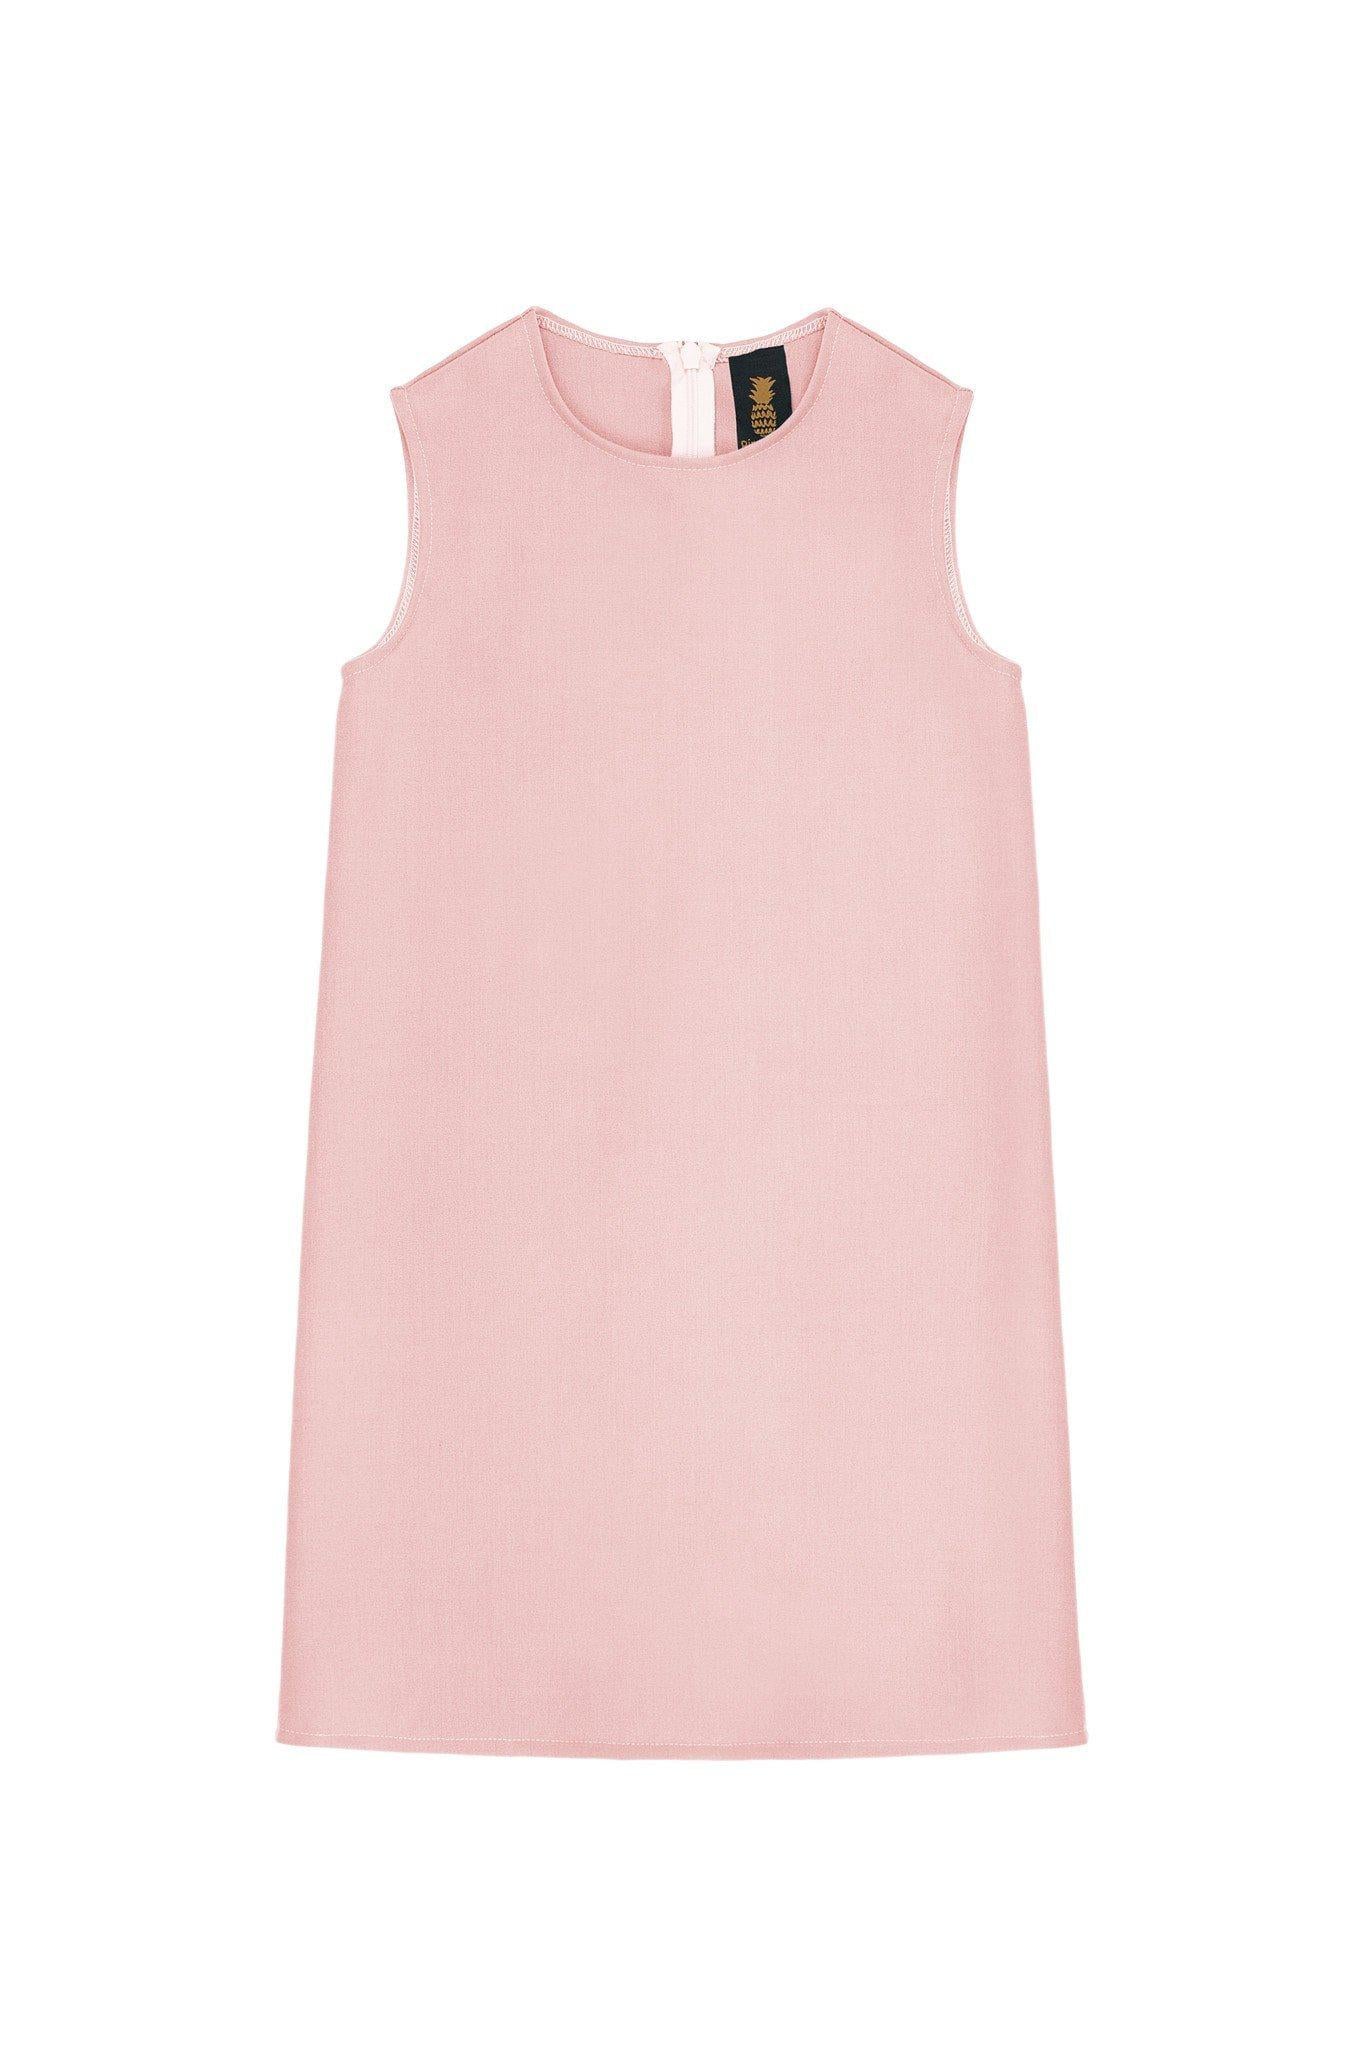 Baby Pink Blush Sleeveless Cute Spring Summer Shift Dress - Girls - Pineapple Clothing